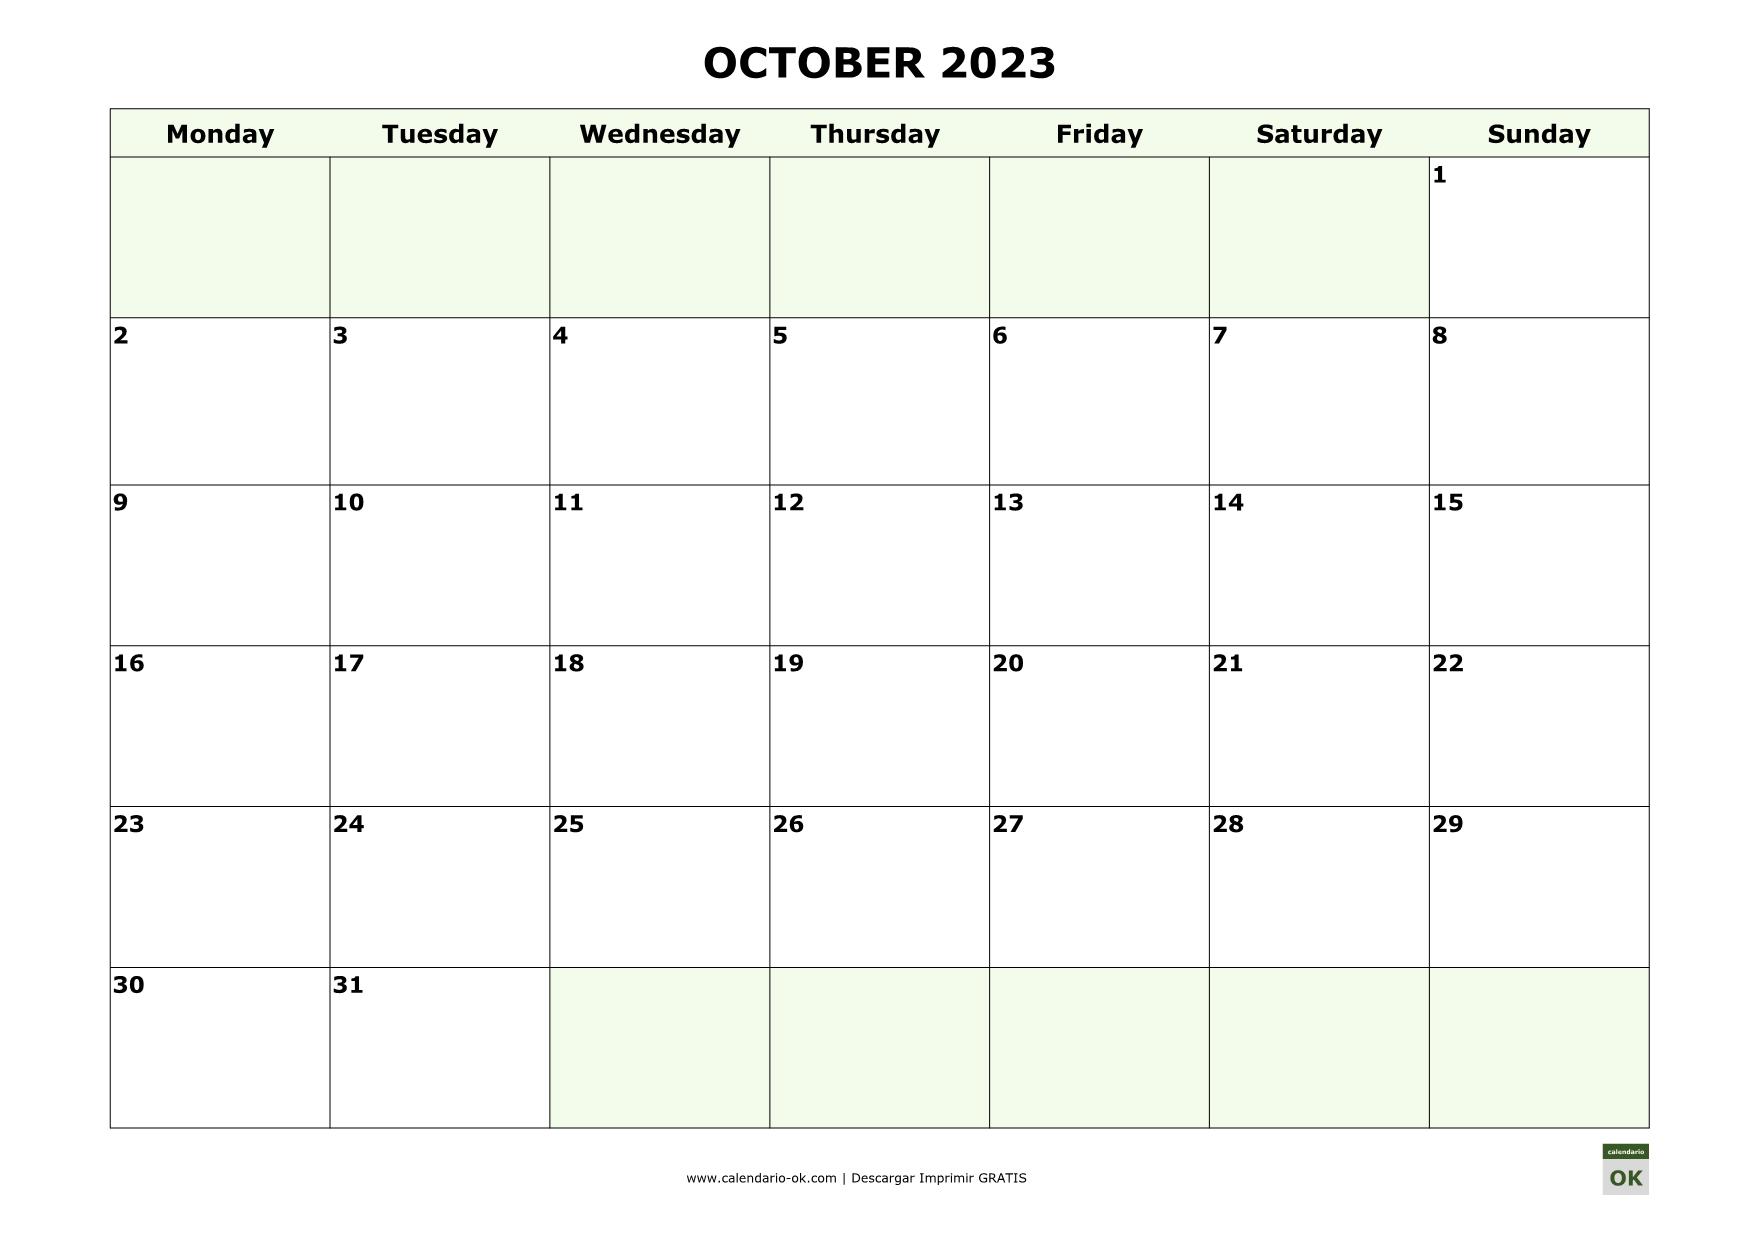 OCTUBRE 2023 calendario en INGLES